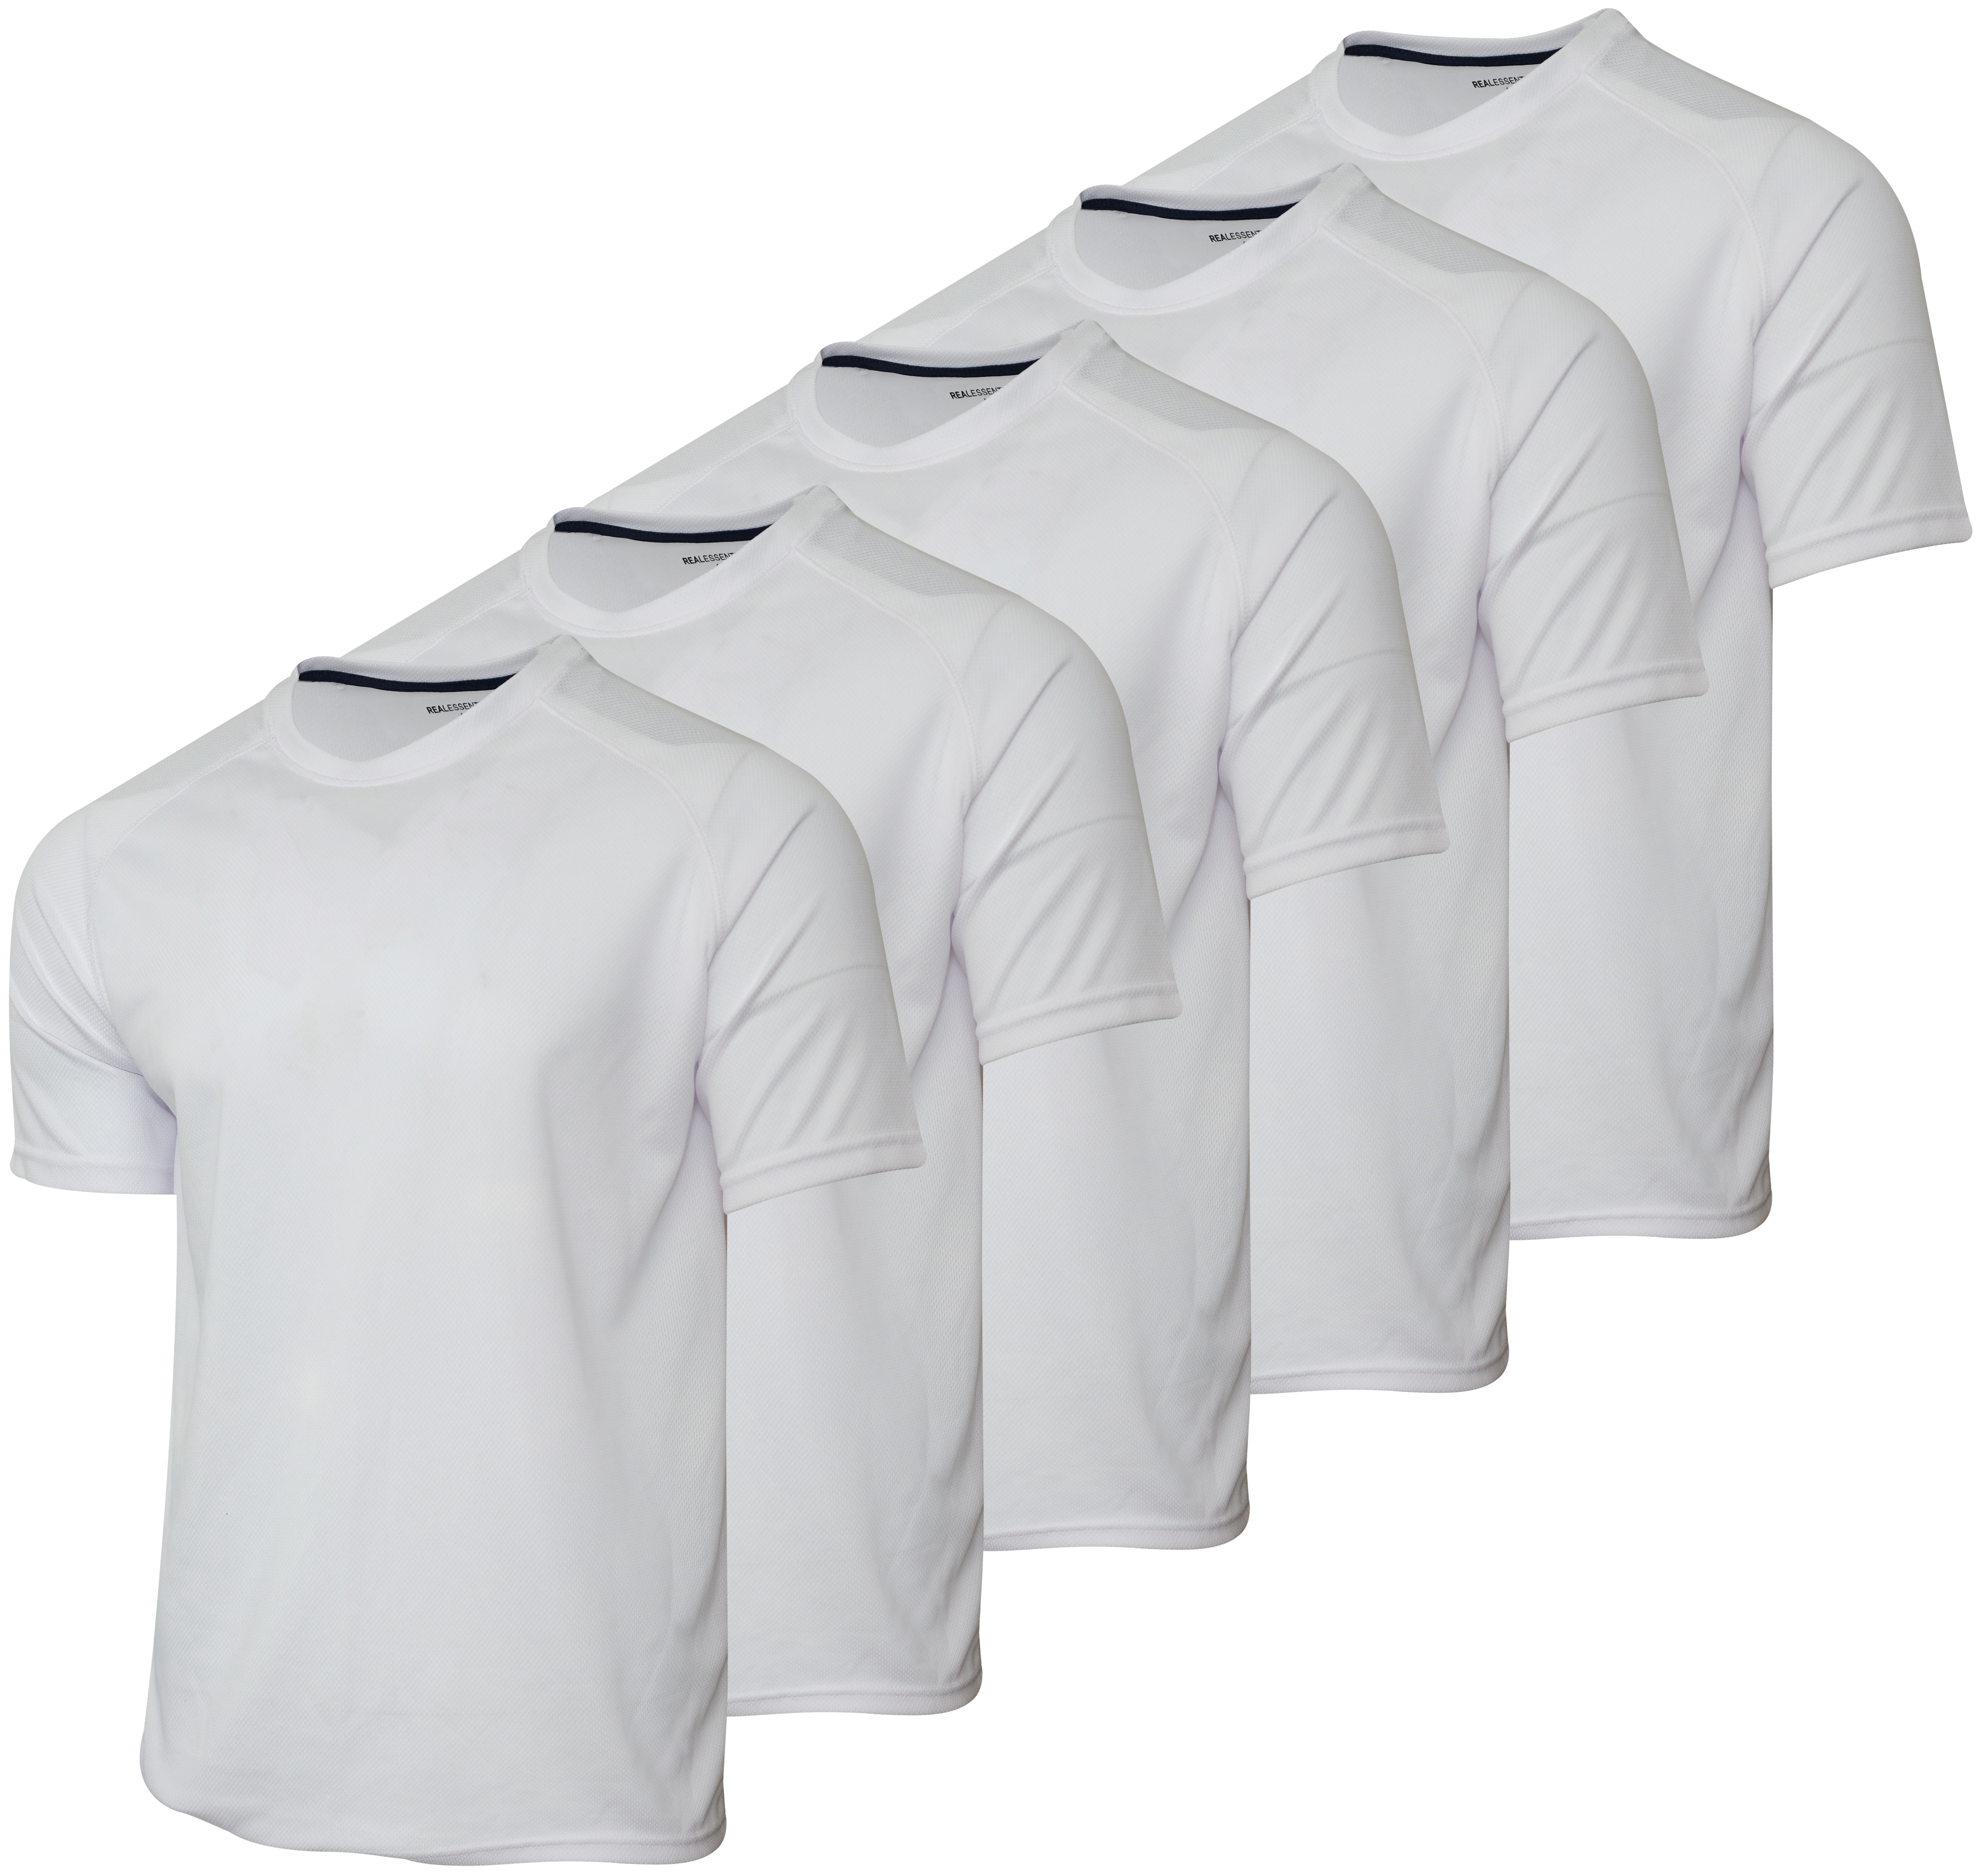 Tennis Gym & Exercise Activewear Top GIVEITPRO 3 Saver Pack Quick Dry T-Shirts Men's Performance Mesh Crew Workout T-Shirt 